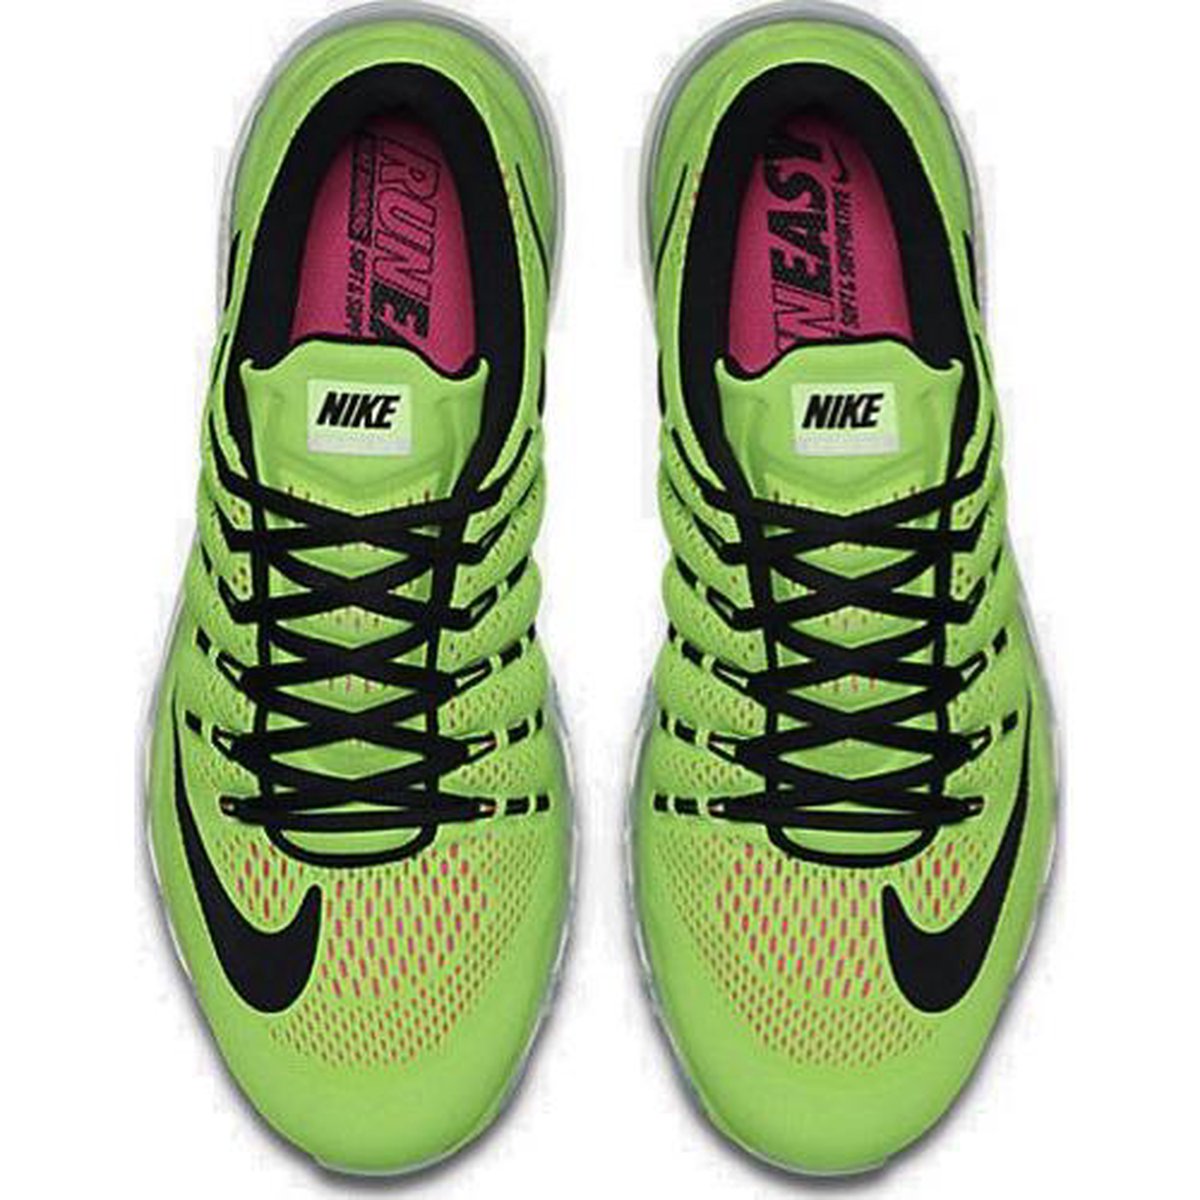 levering aan huis Stal Giftig Nike Air Max 2016 Groen | bol.com